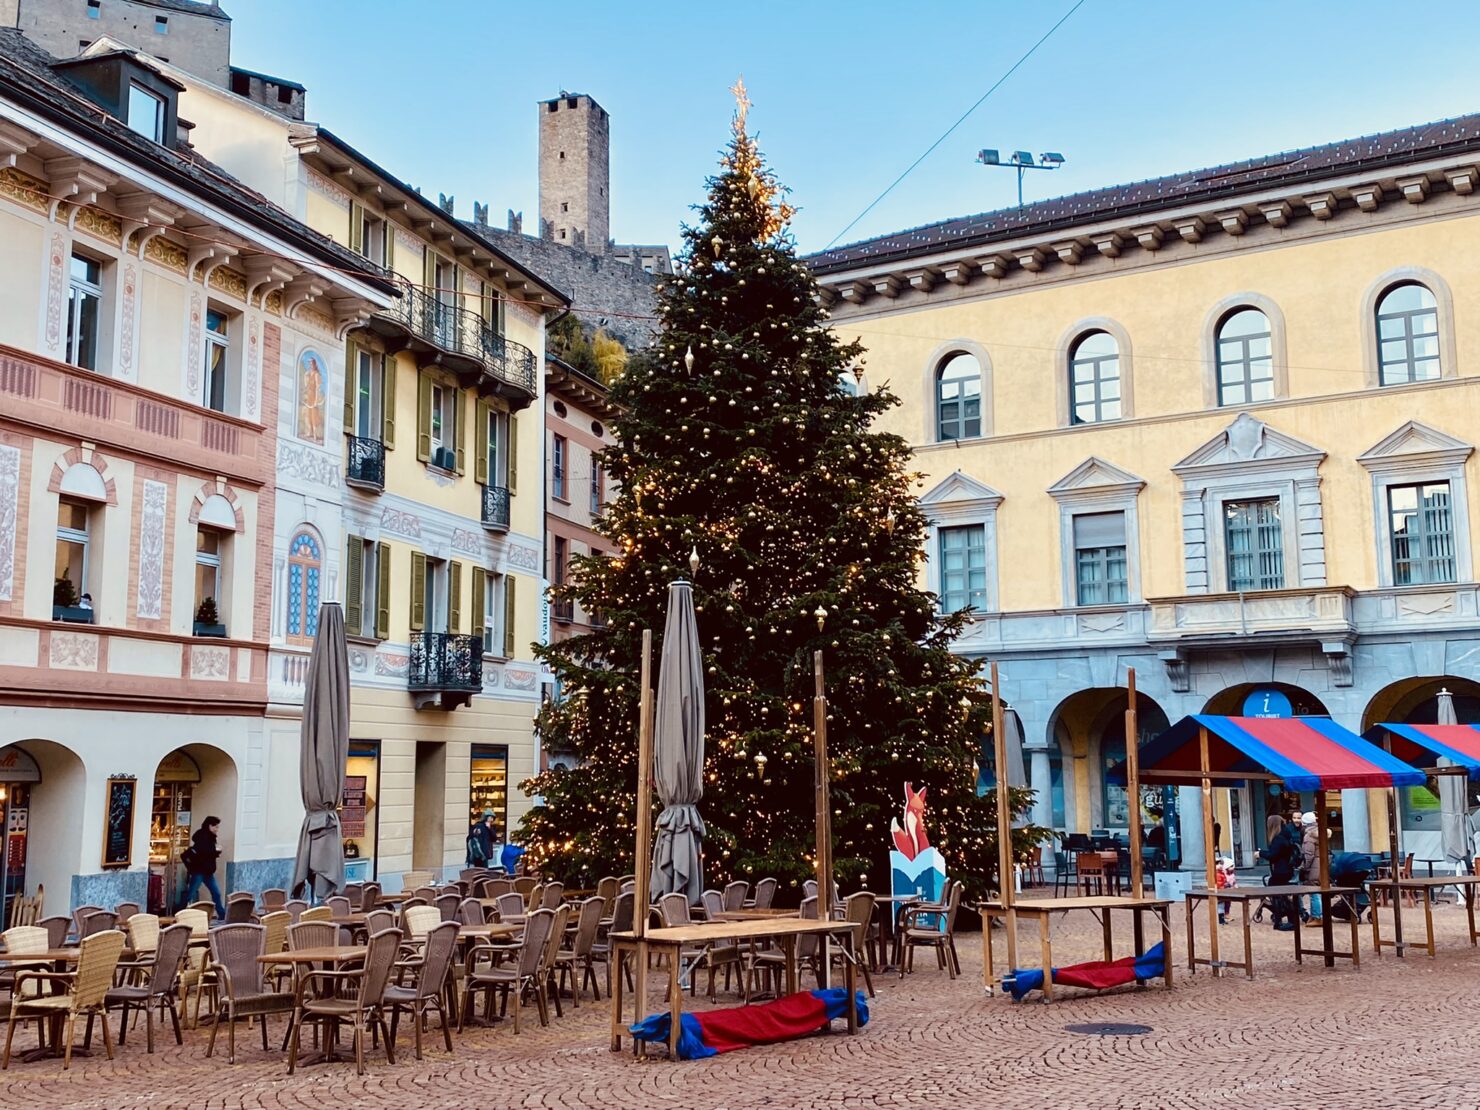 Natale in Città - Advents-Wochenende in Bellinzona